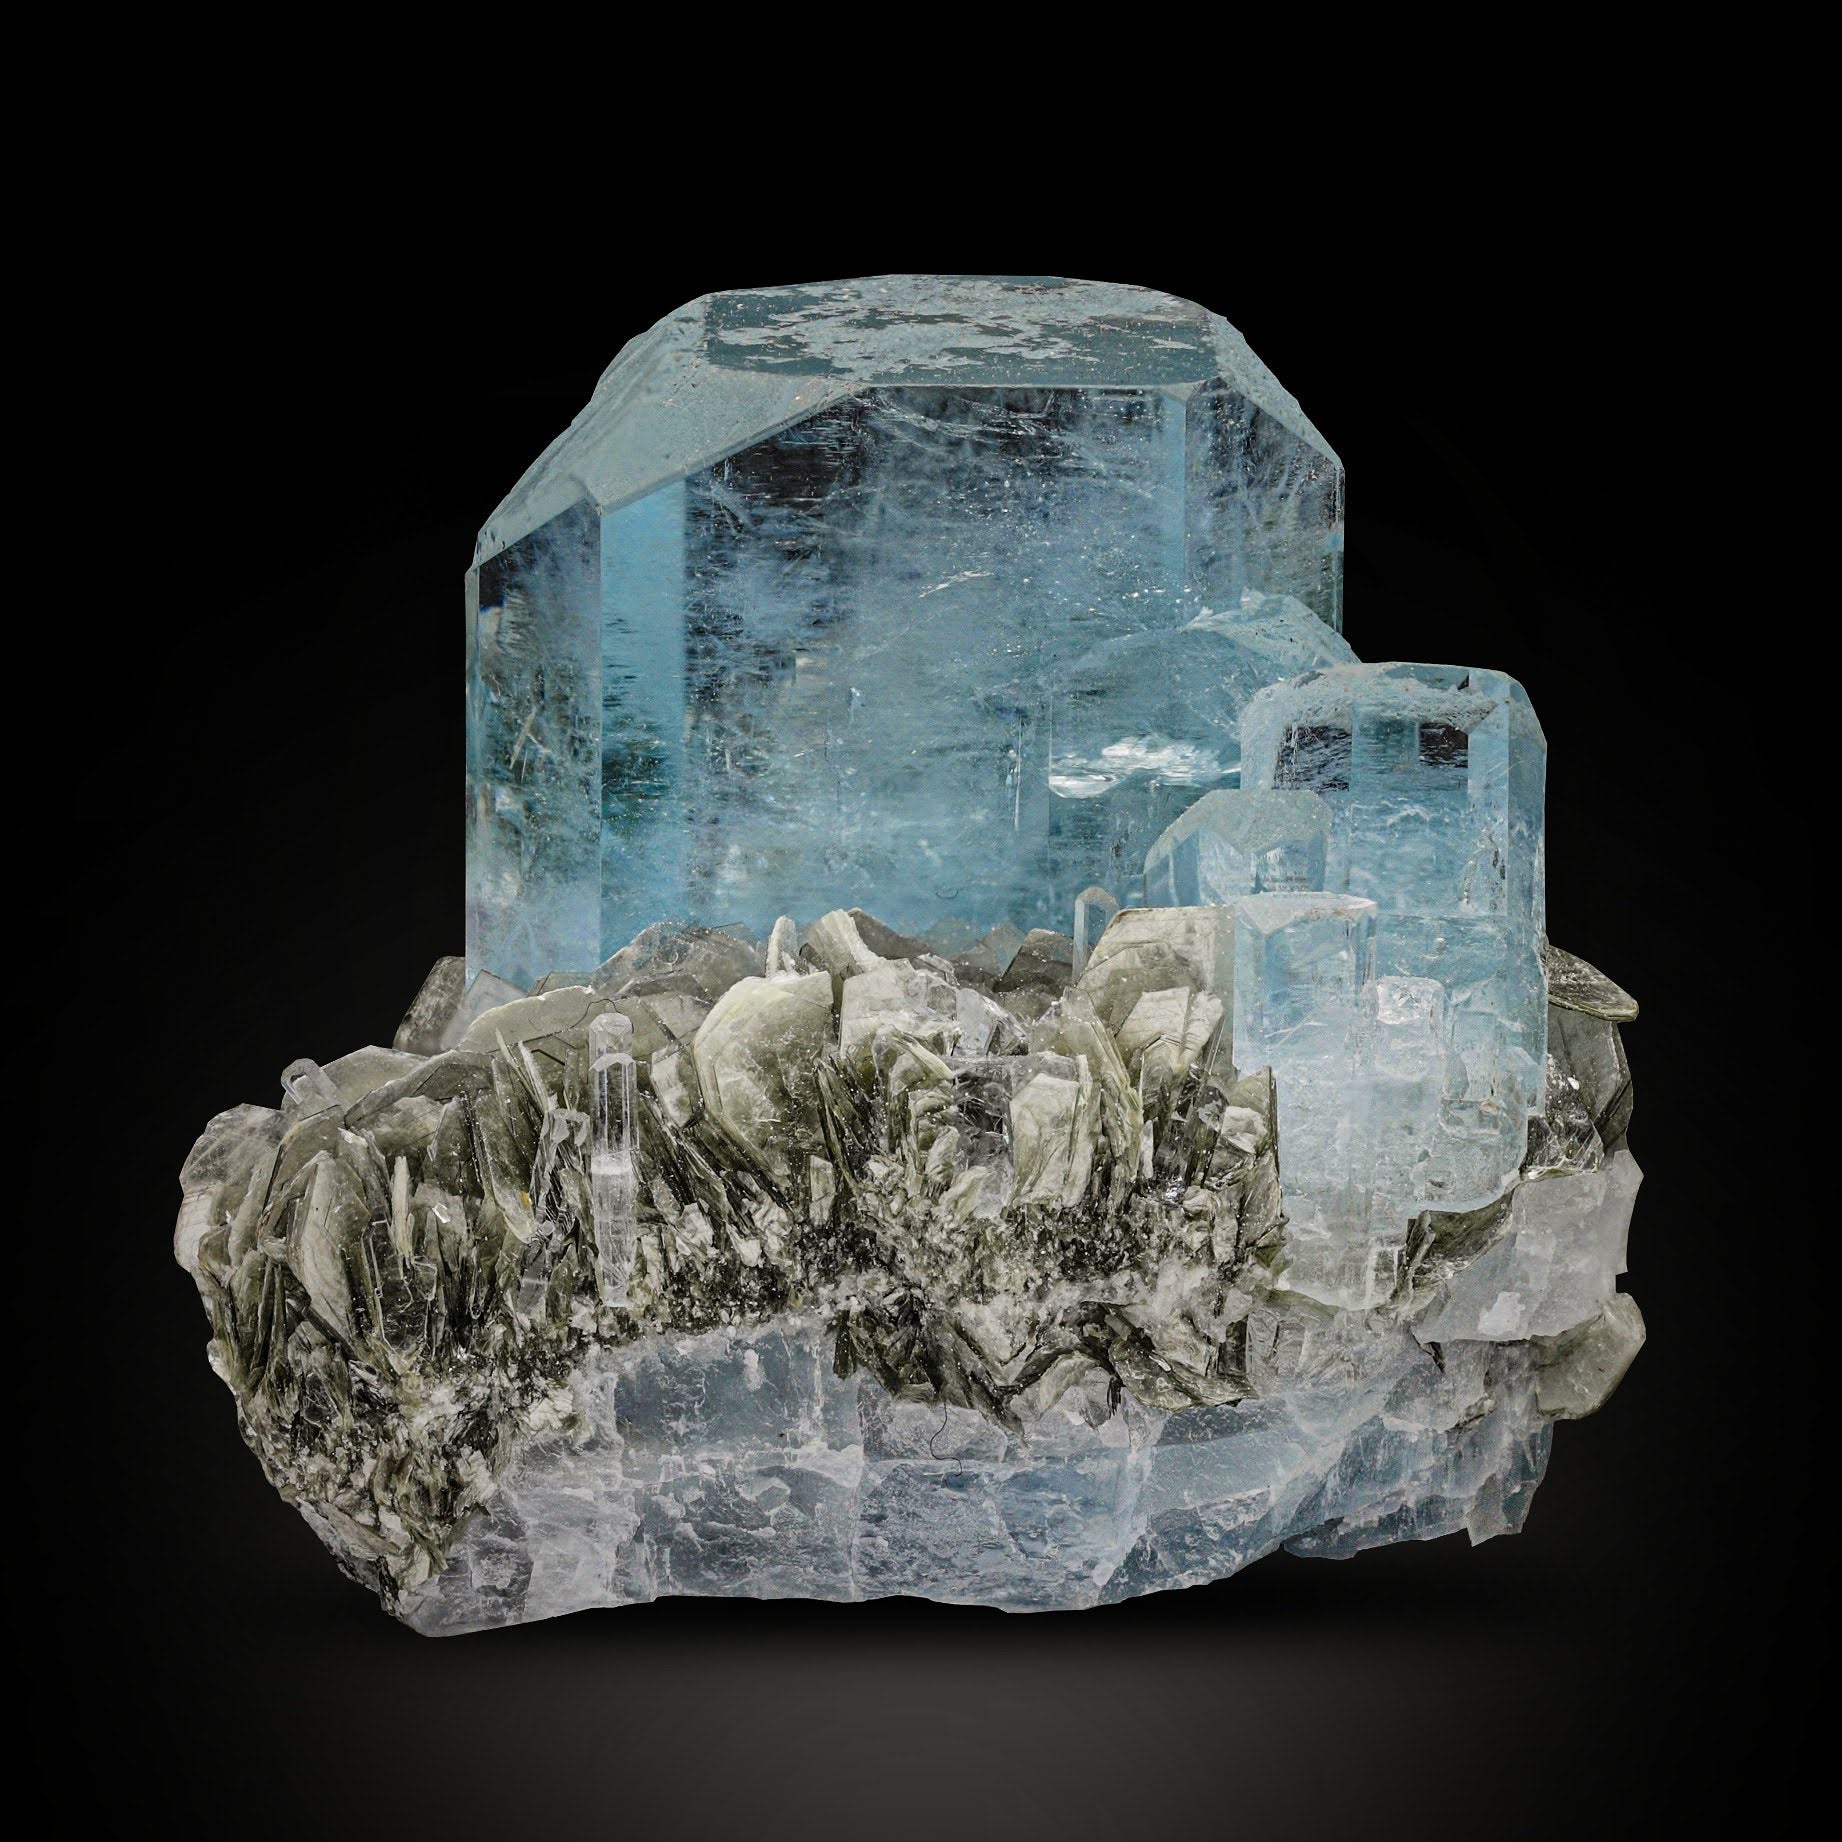 Aquamarine Crystals with Muscovite